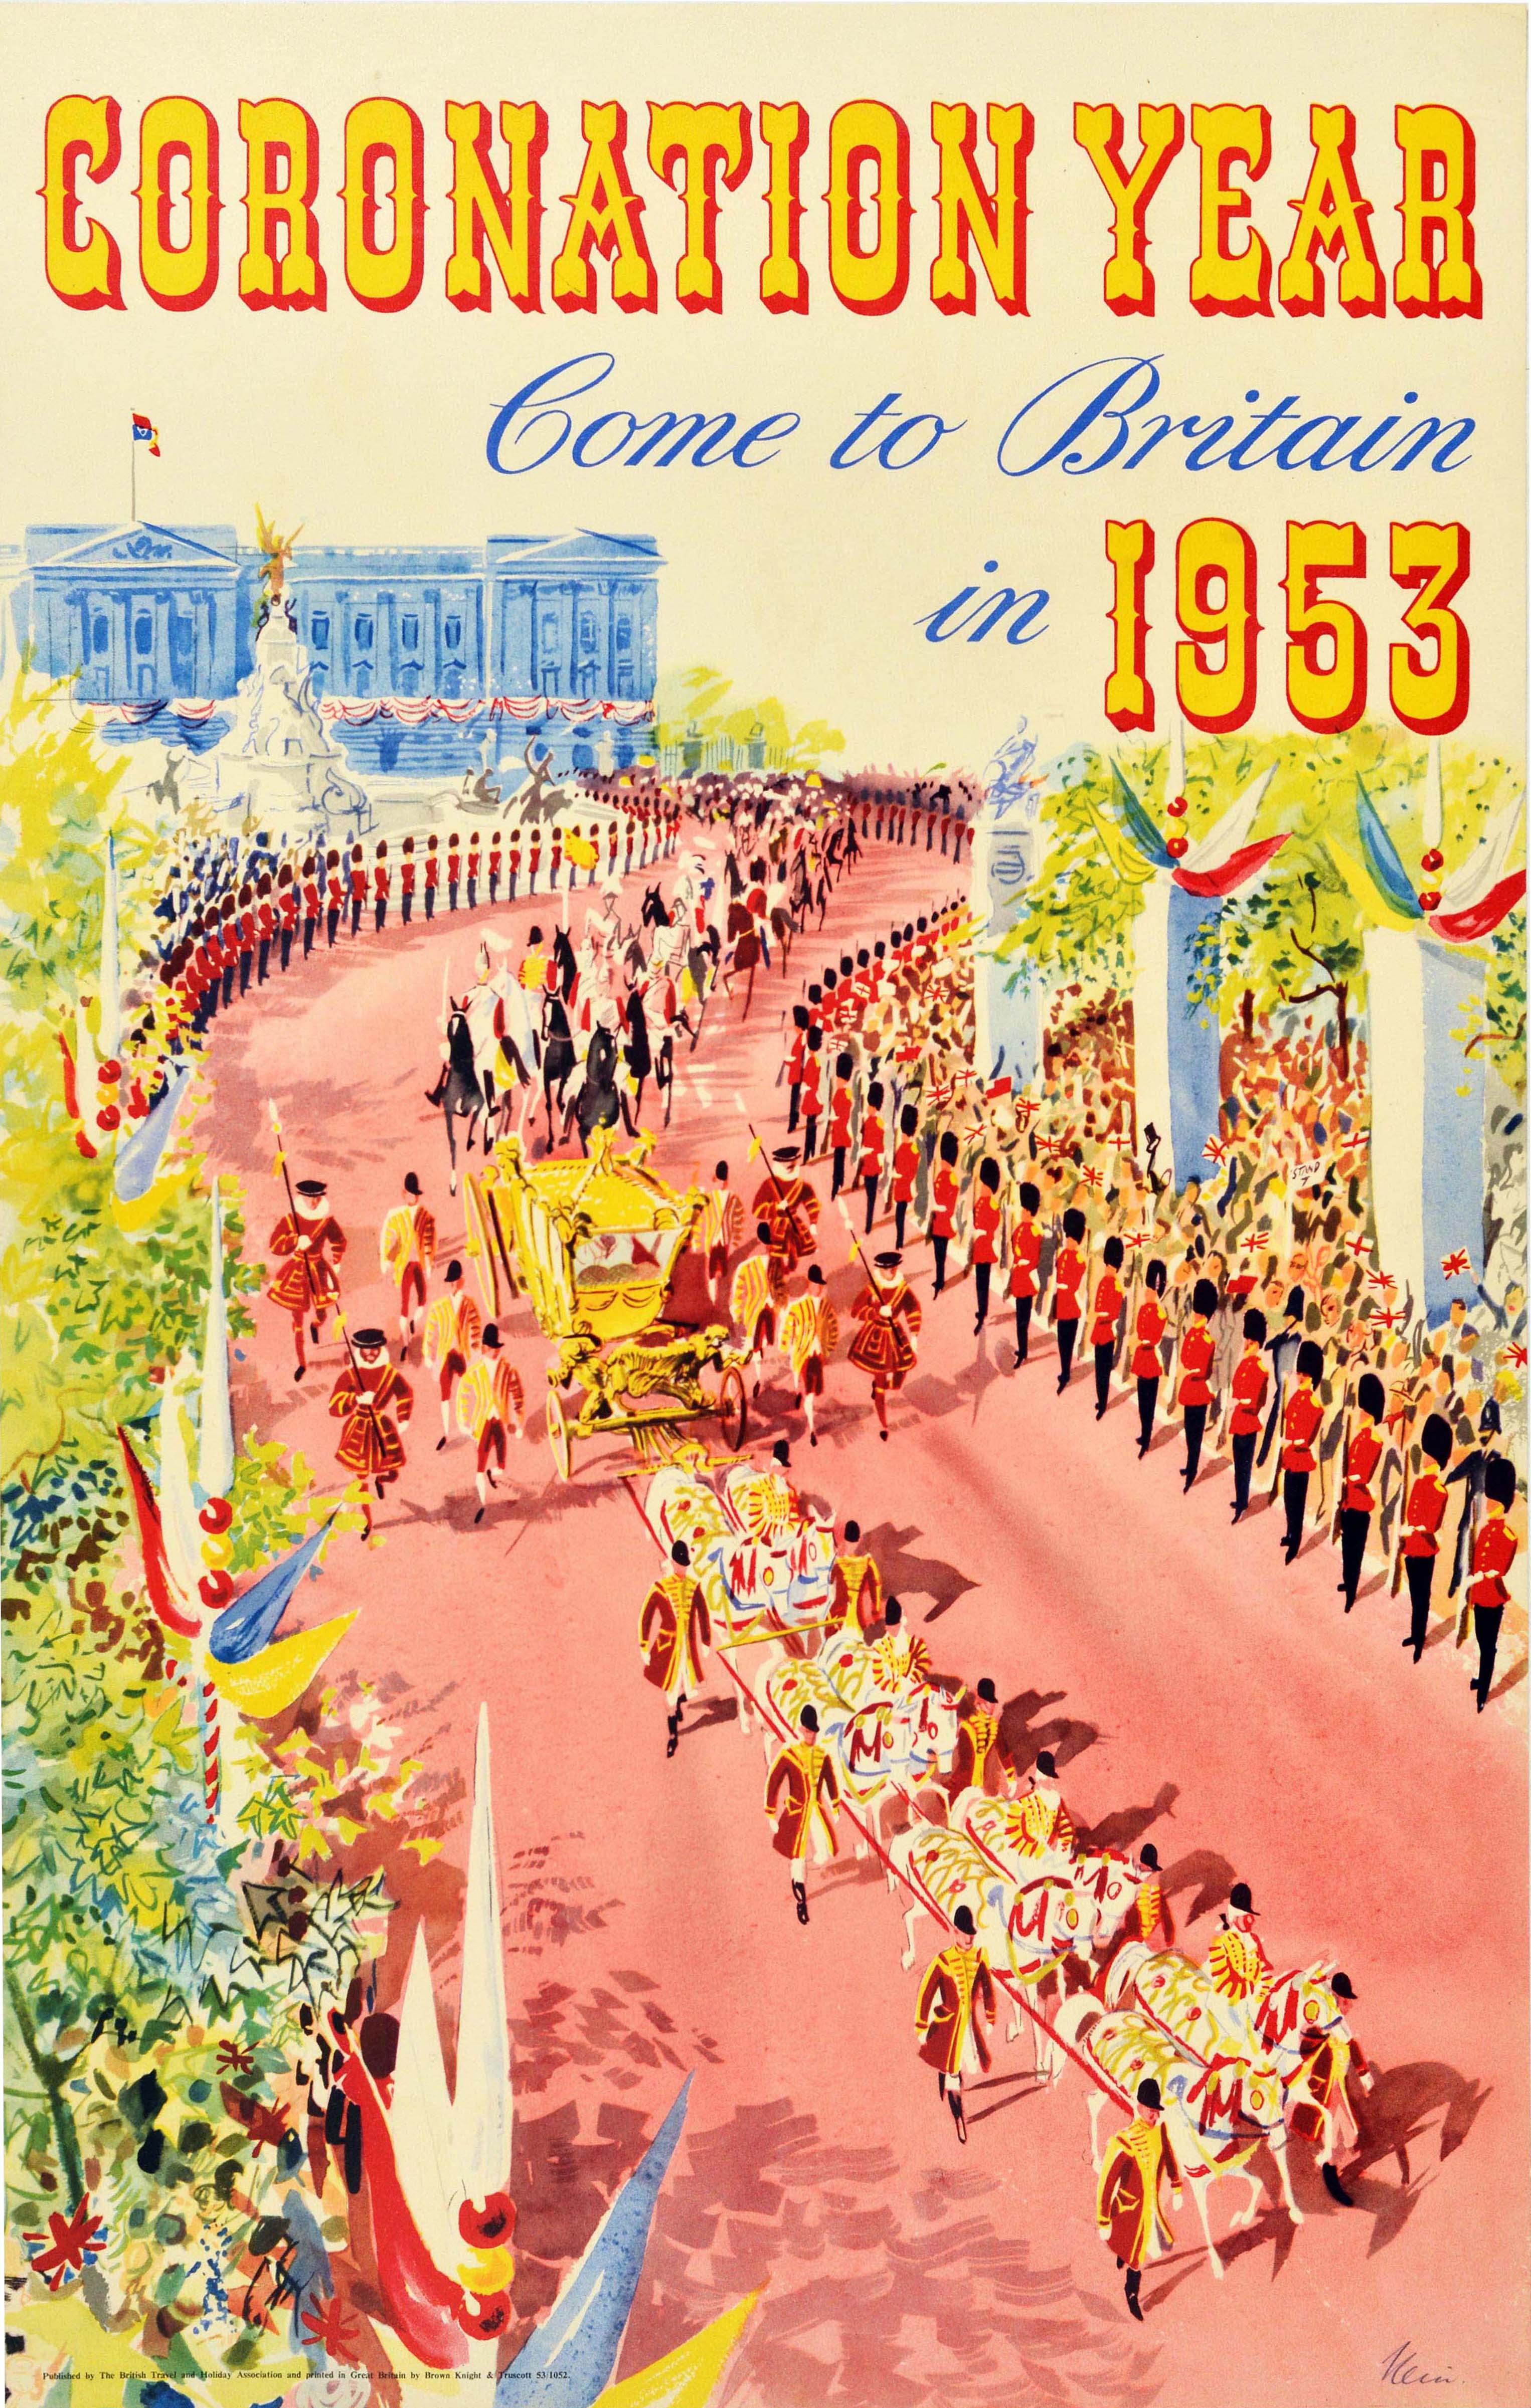 Unknown Print - Original Vintage Travel Poster Coronation Year Come To Britain Queen Elizabeth 